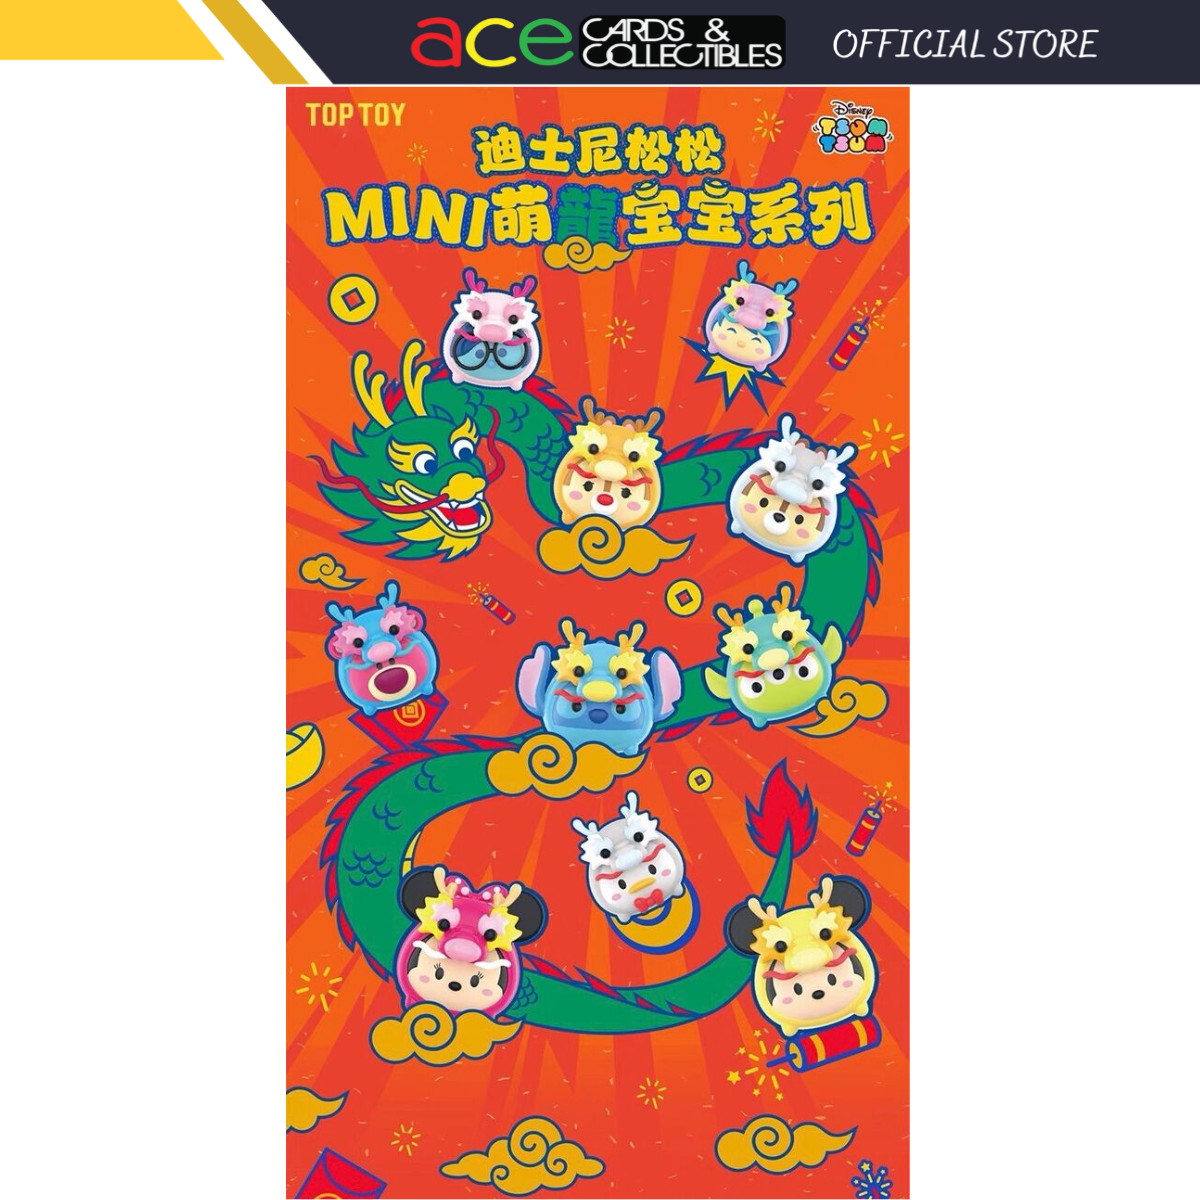 Top Toy x Disney Tsum Tsum Mini Dragon Cuteness-Single Box (Random)-TopToy-Ace Cards & Collectibles